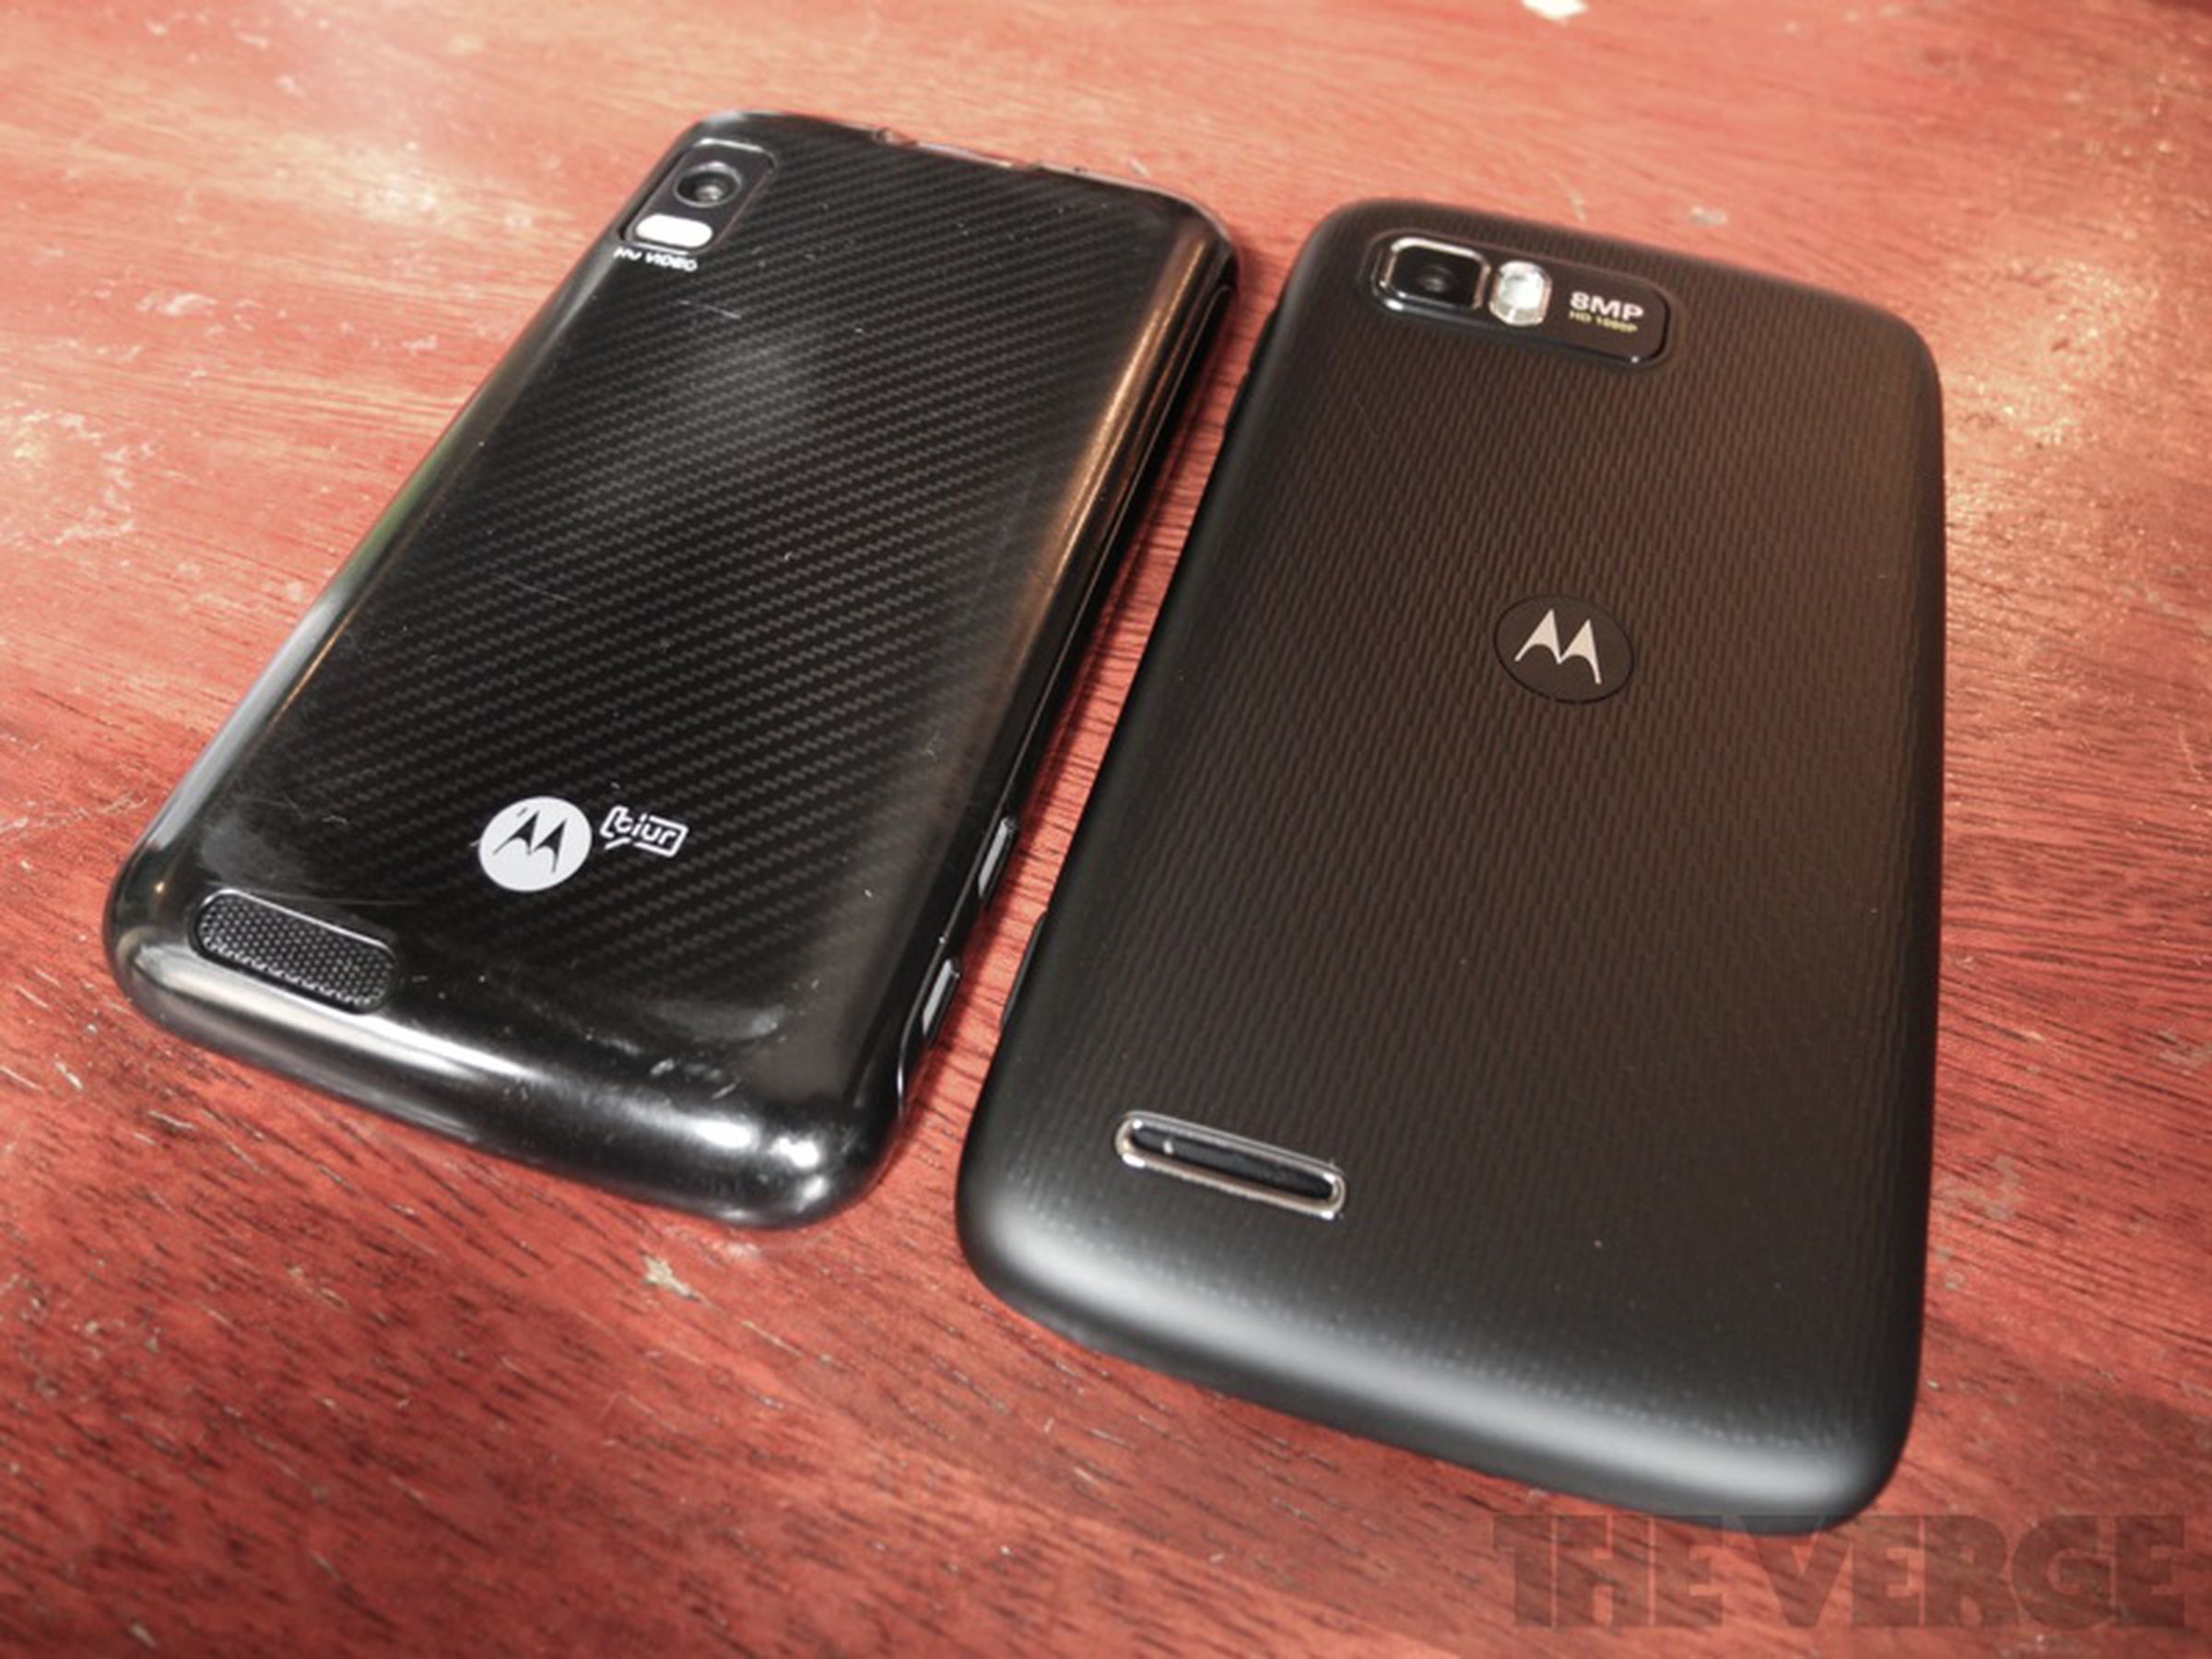 Motorola Edison (Atrix 2) hands on photos